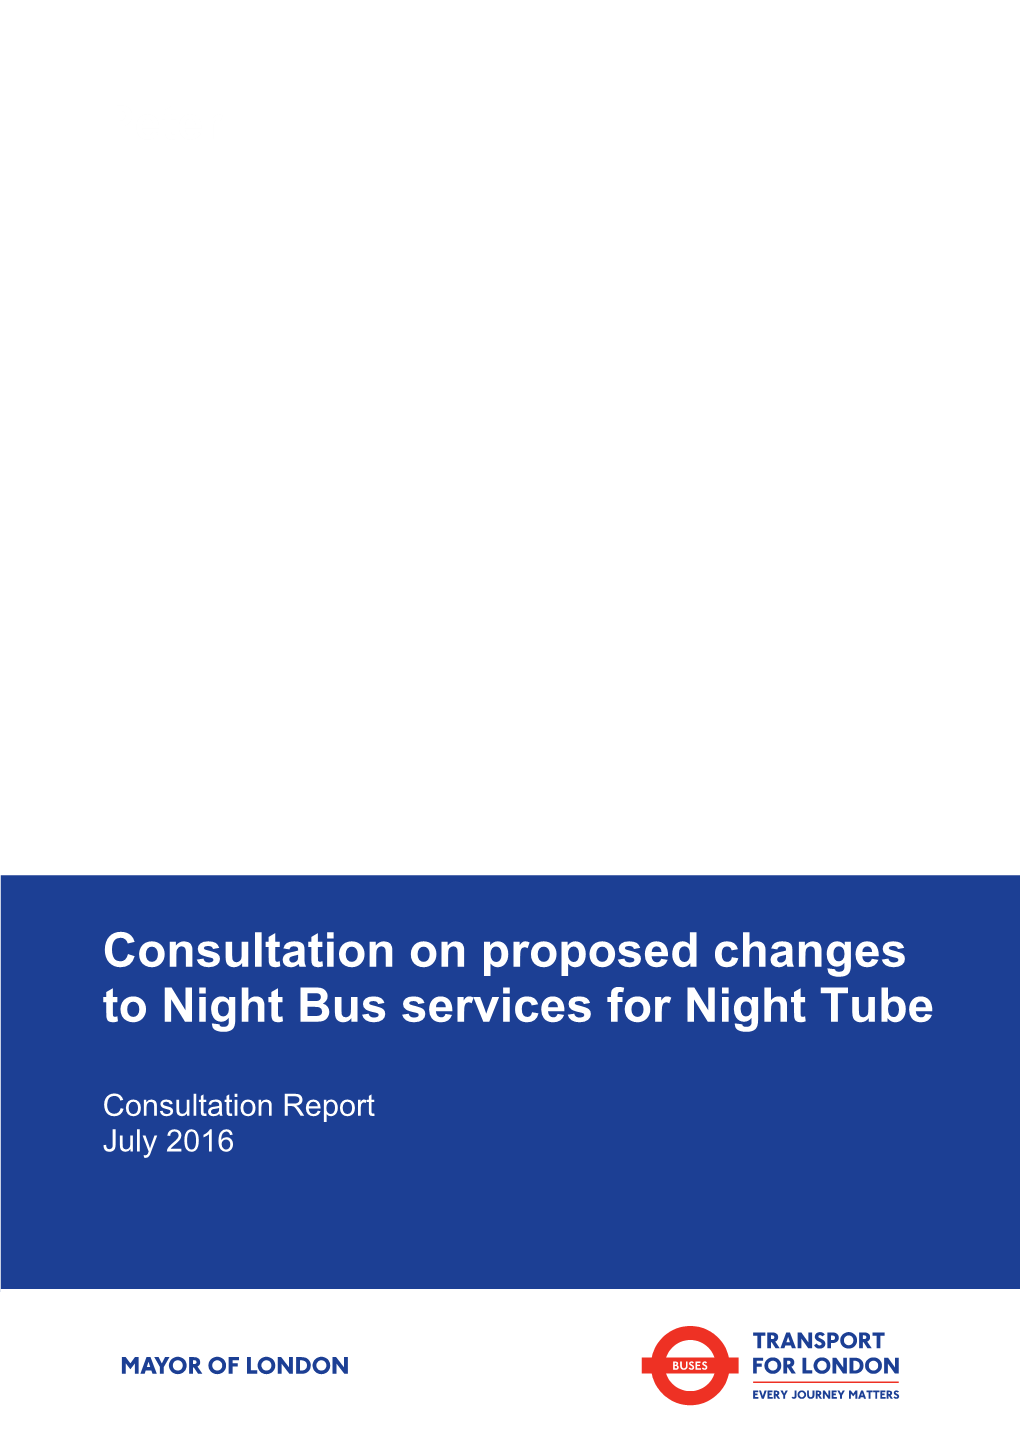 Night Bus for Night Tube Consultation Report